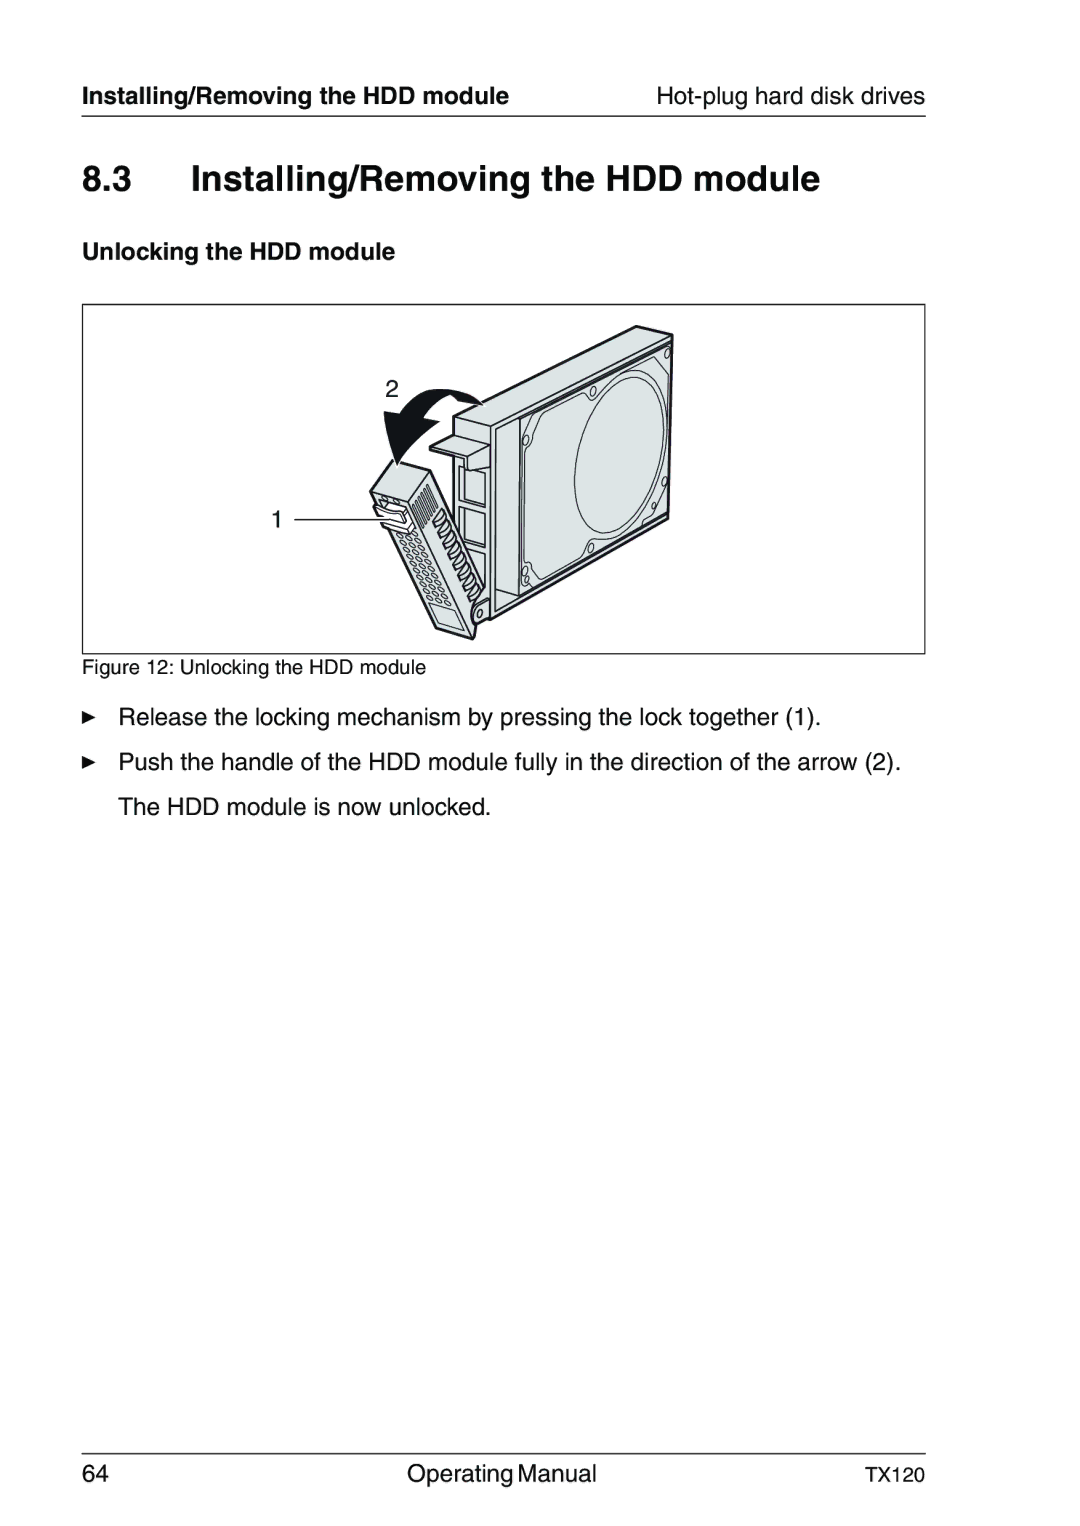 Fujitsu TX120 manual Installing/Removing the HDD module, Unlocking the HDD module 